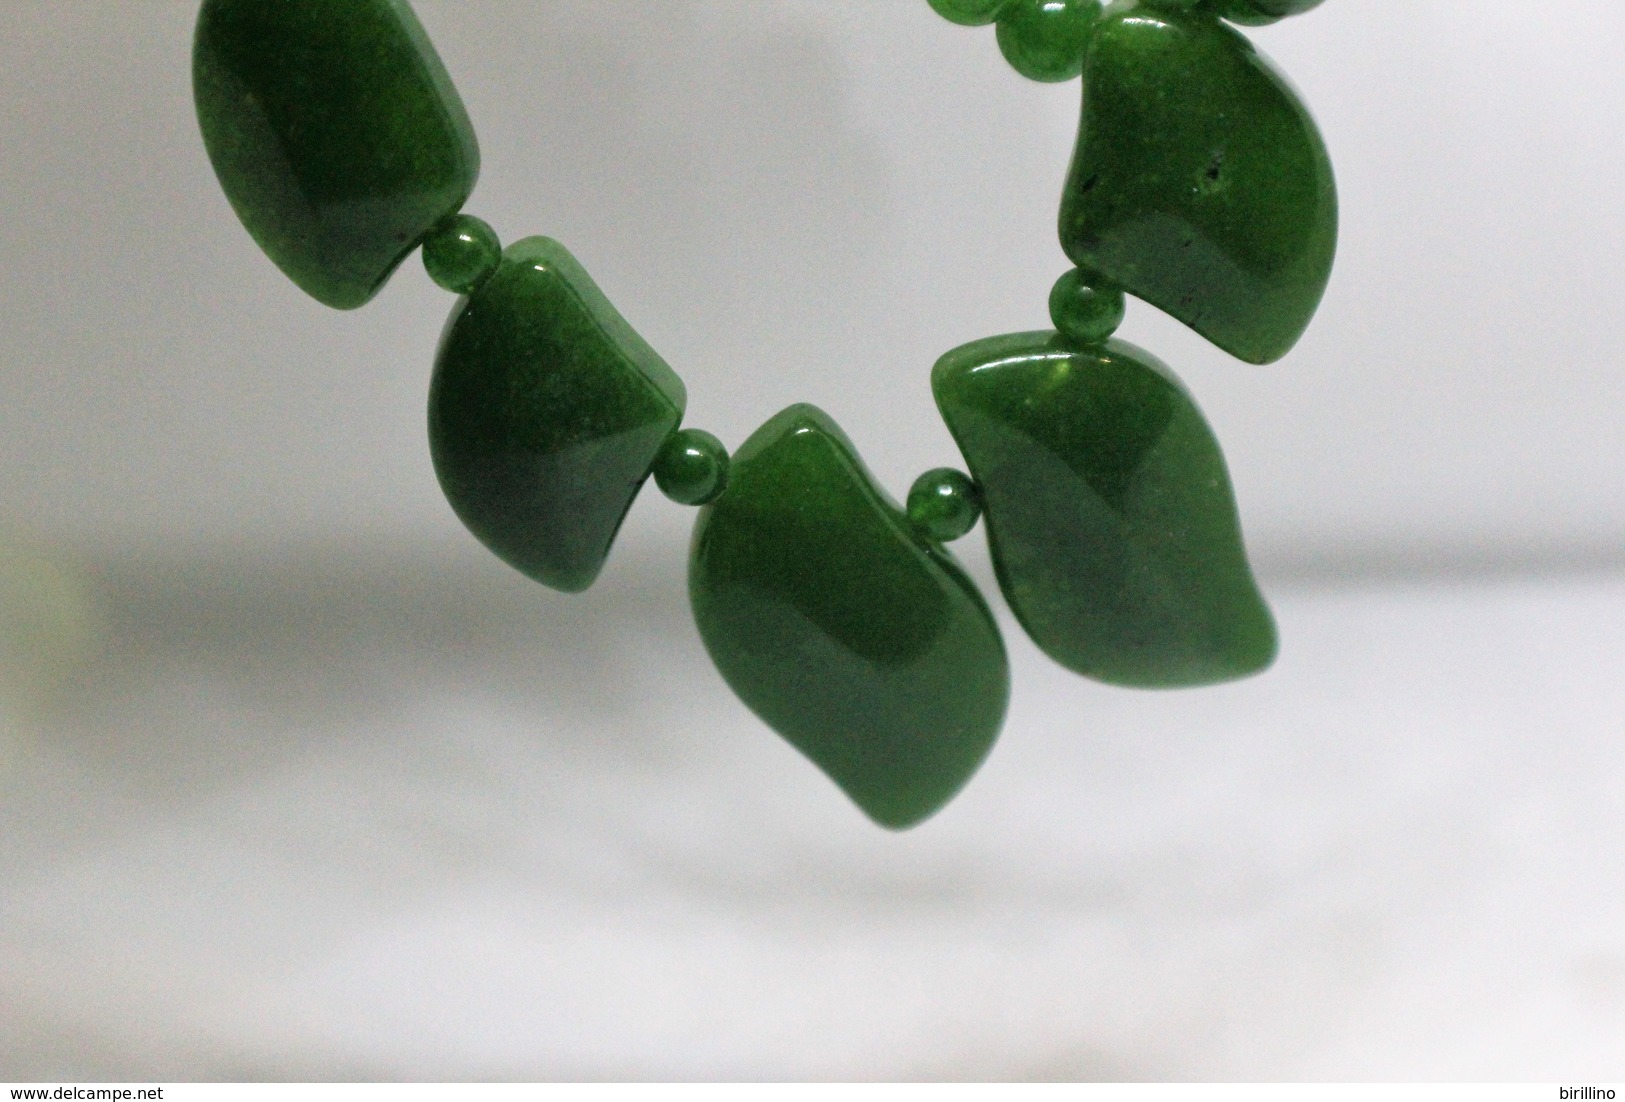 3856 - Collana di giada naturale (serpentino New Jade) lucidata a mano. Peso totale 44 gr.